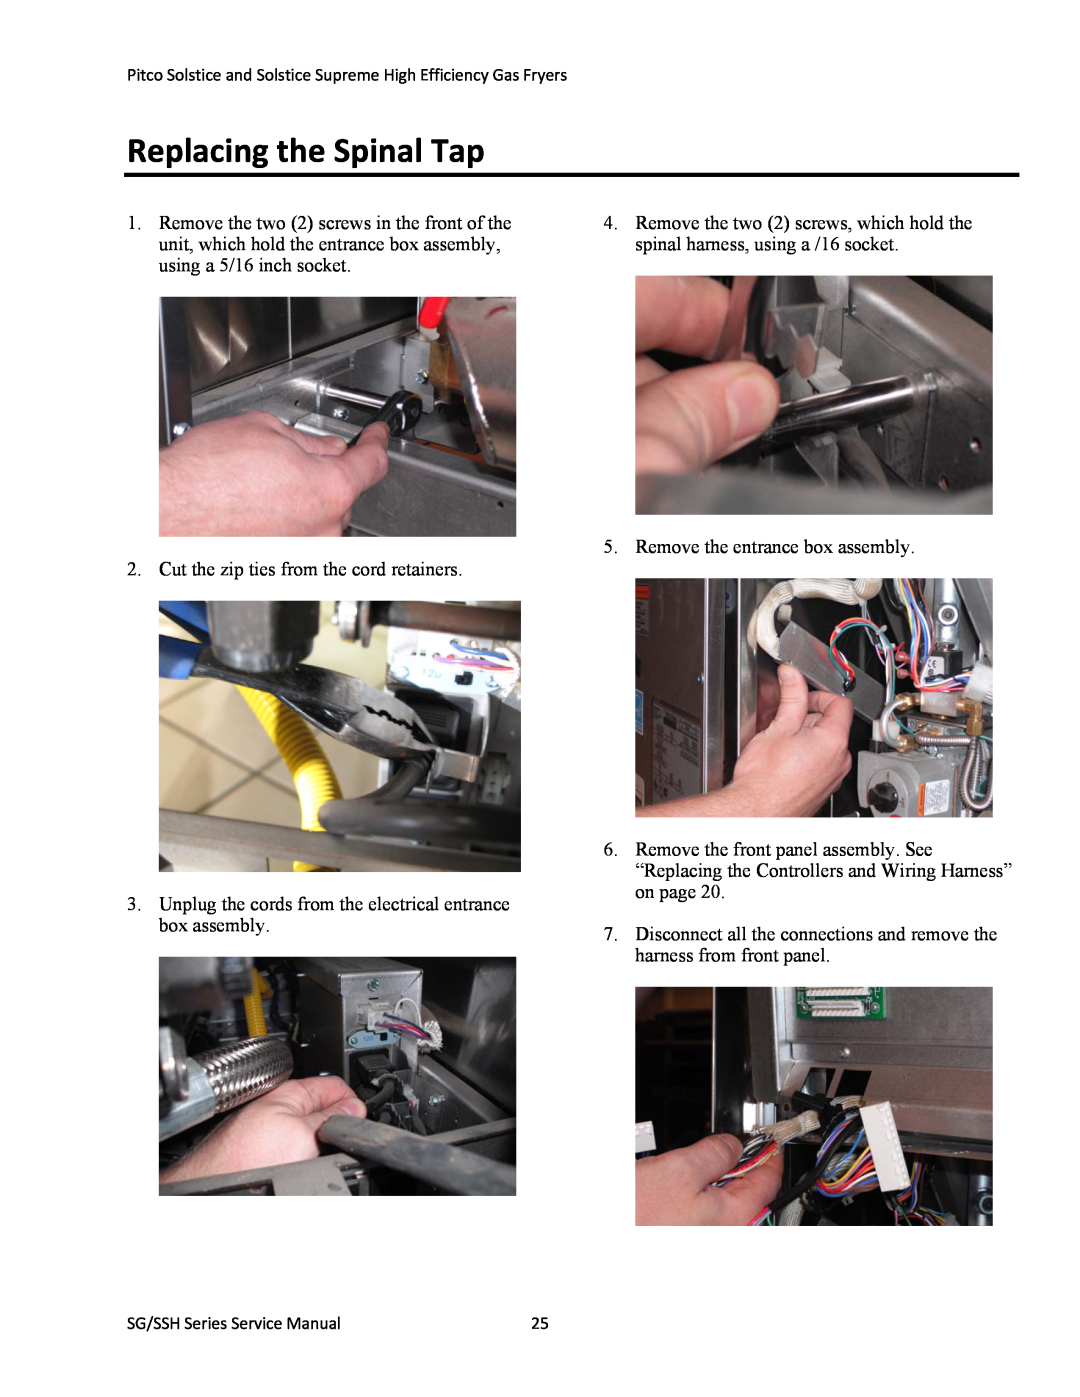 Pitco Frialator L22-345 manual Replacing the Spinal Tap 